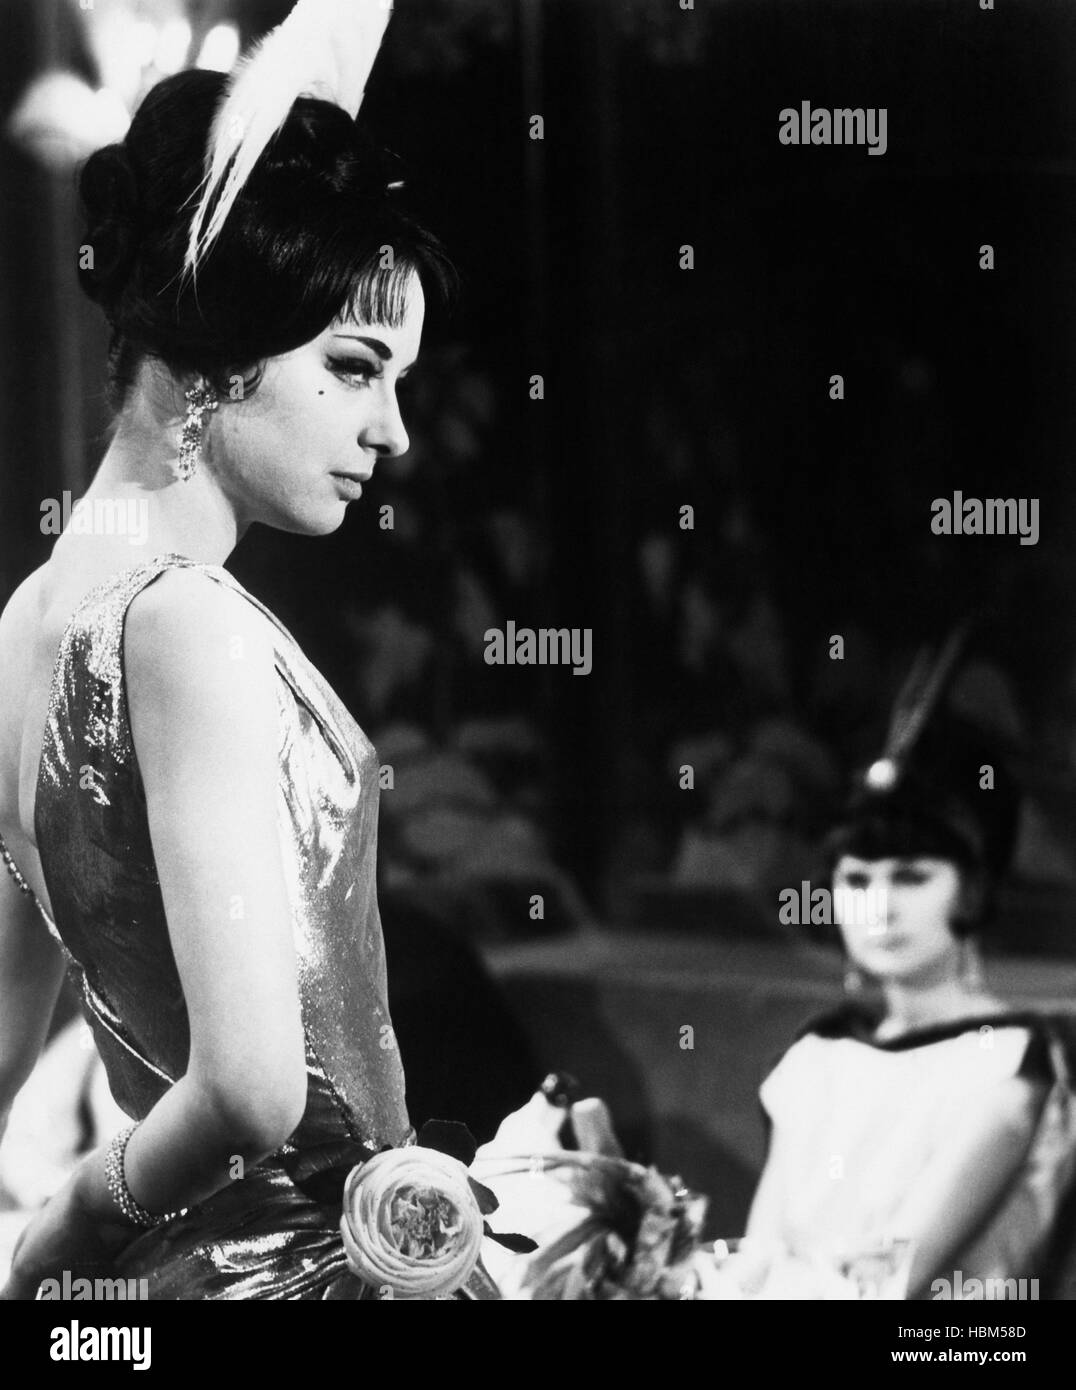 LA RONDE, (aka CIRCLE OF LOVE), Anna Karina, (left), 1964 Stock Photo ...